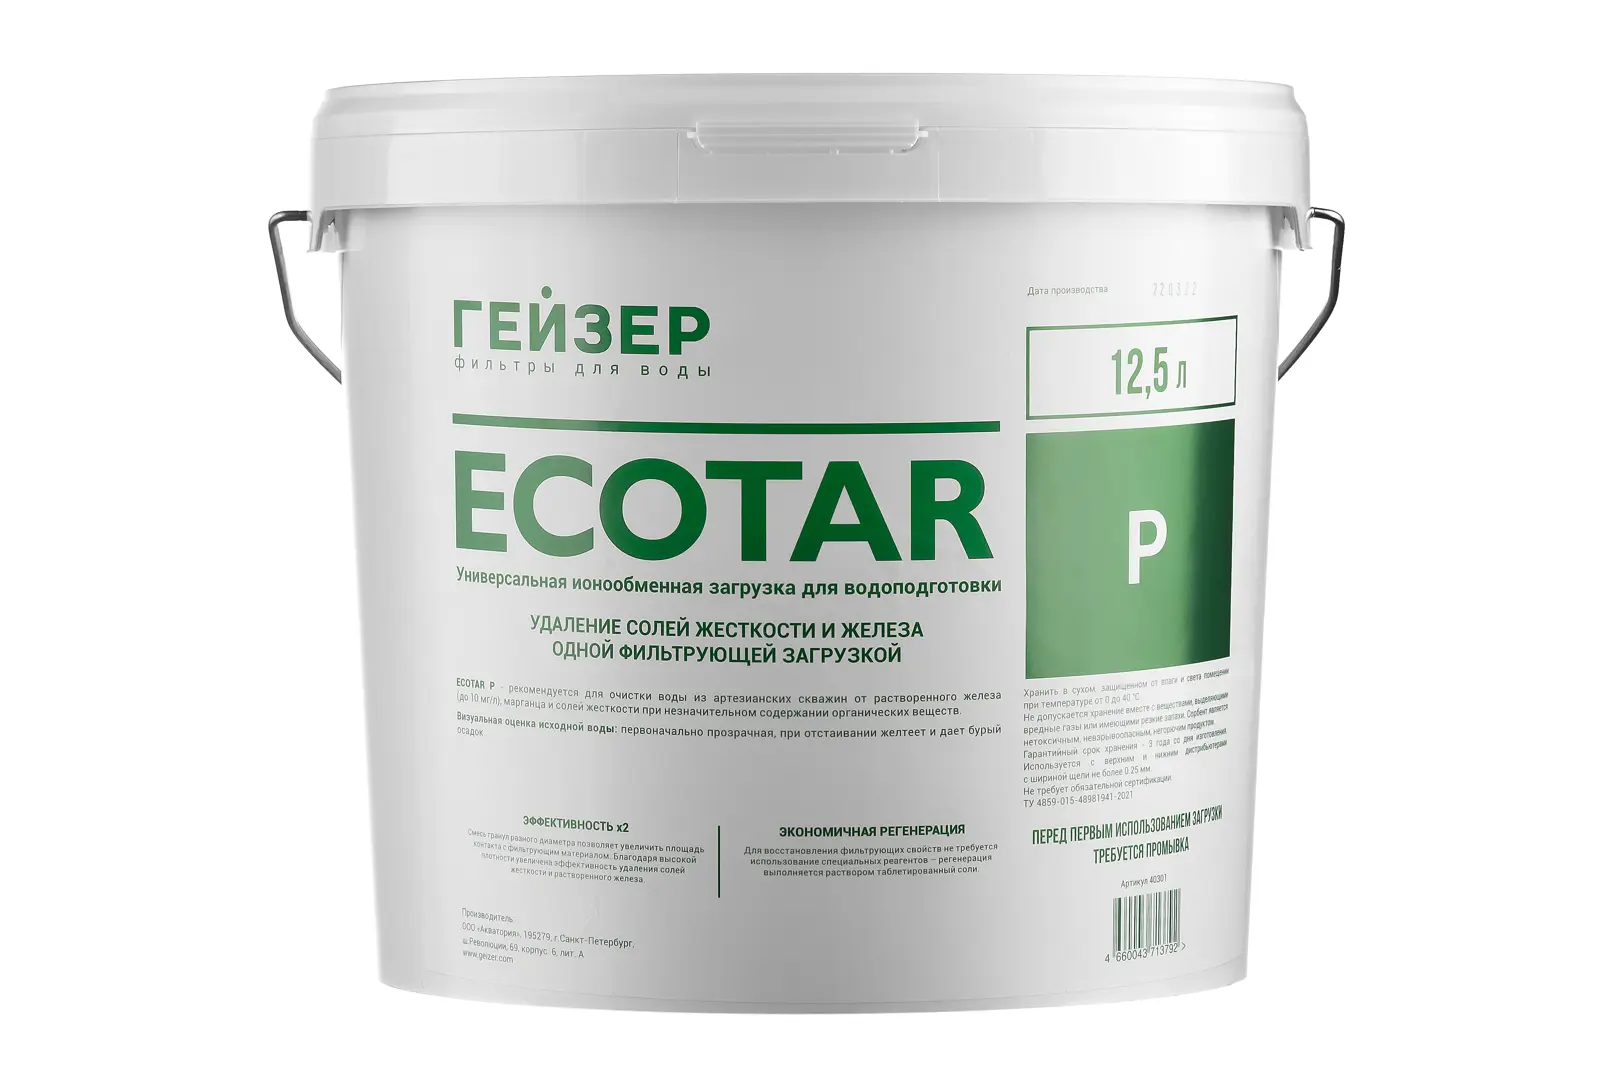 Засыпка Ecotar Р для Гейзер ведро 12.5 л сменная засыпка гейзер аквасофт 35863